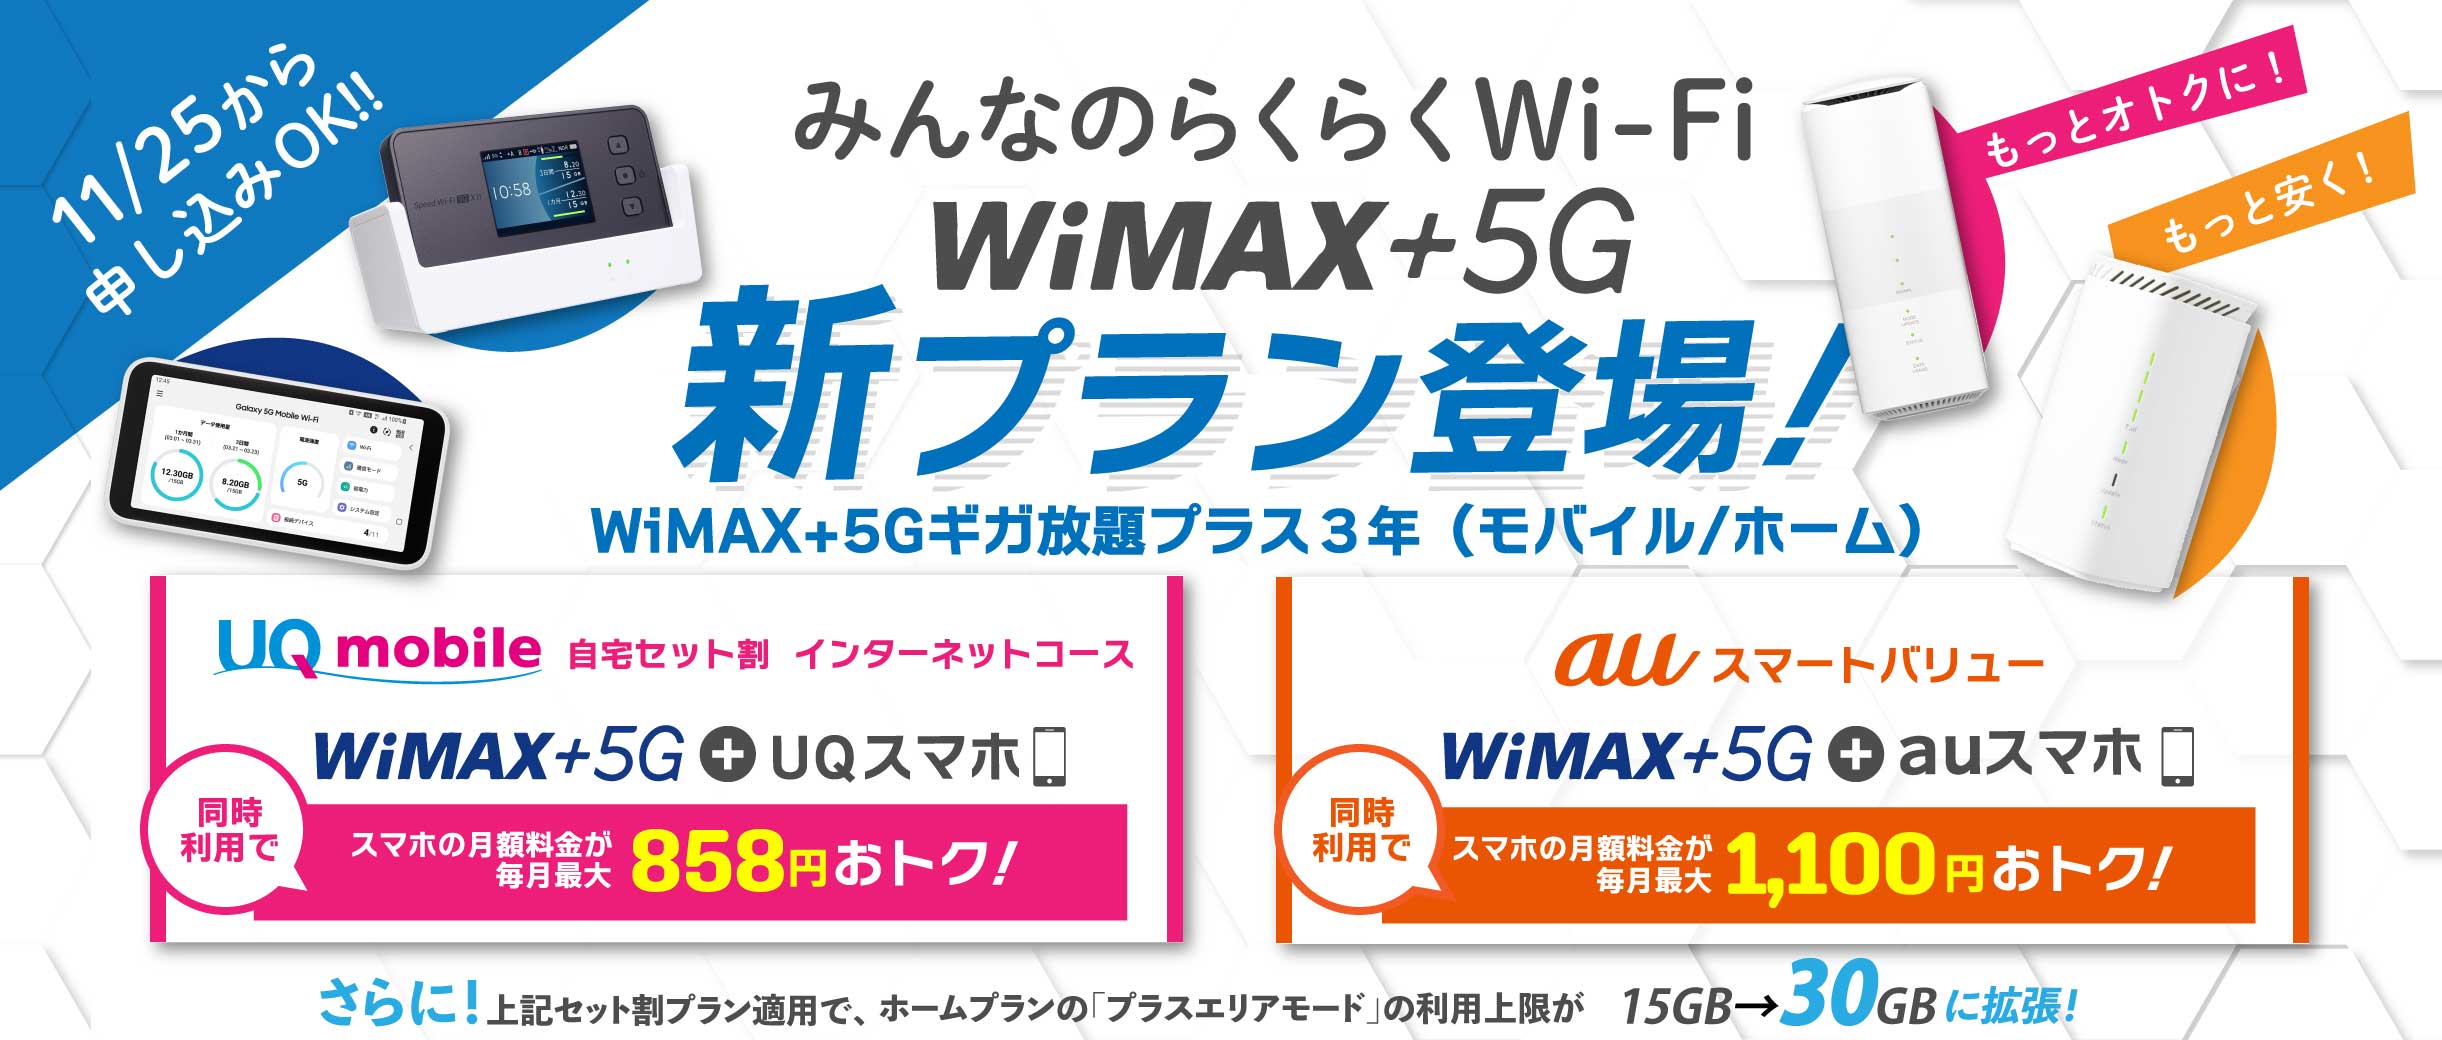 WiMAX 5g ワイマックス 5G キャッシュバック キャンペーン 料金プラン みんなのらくらくwifi